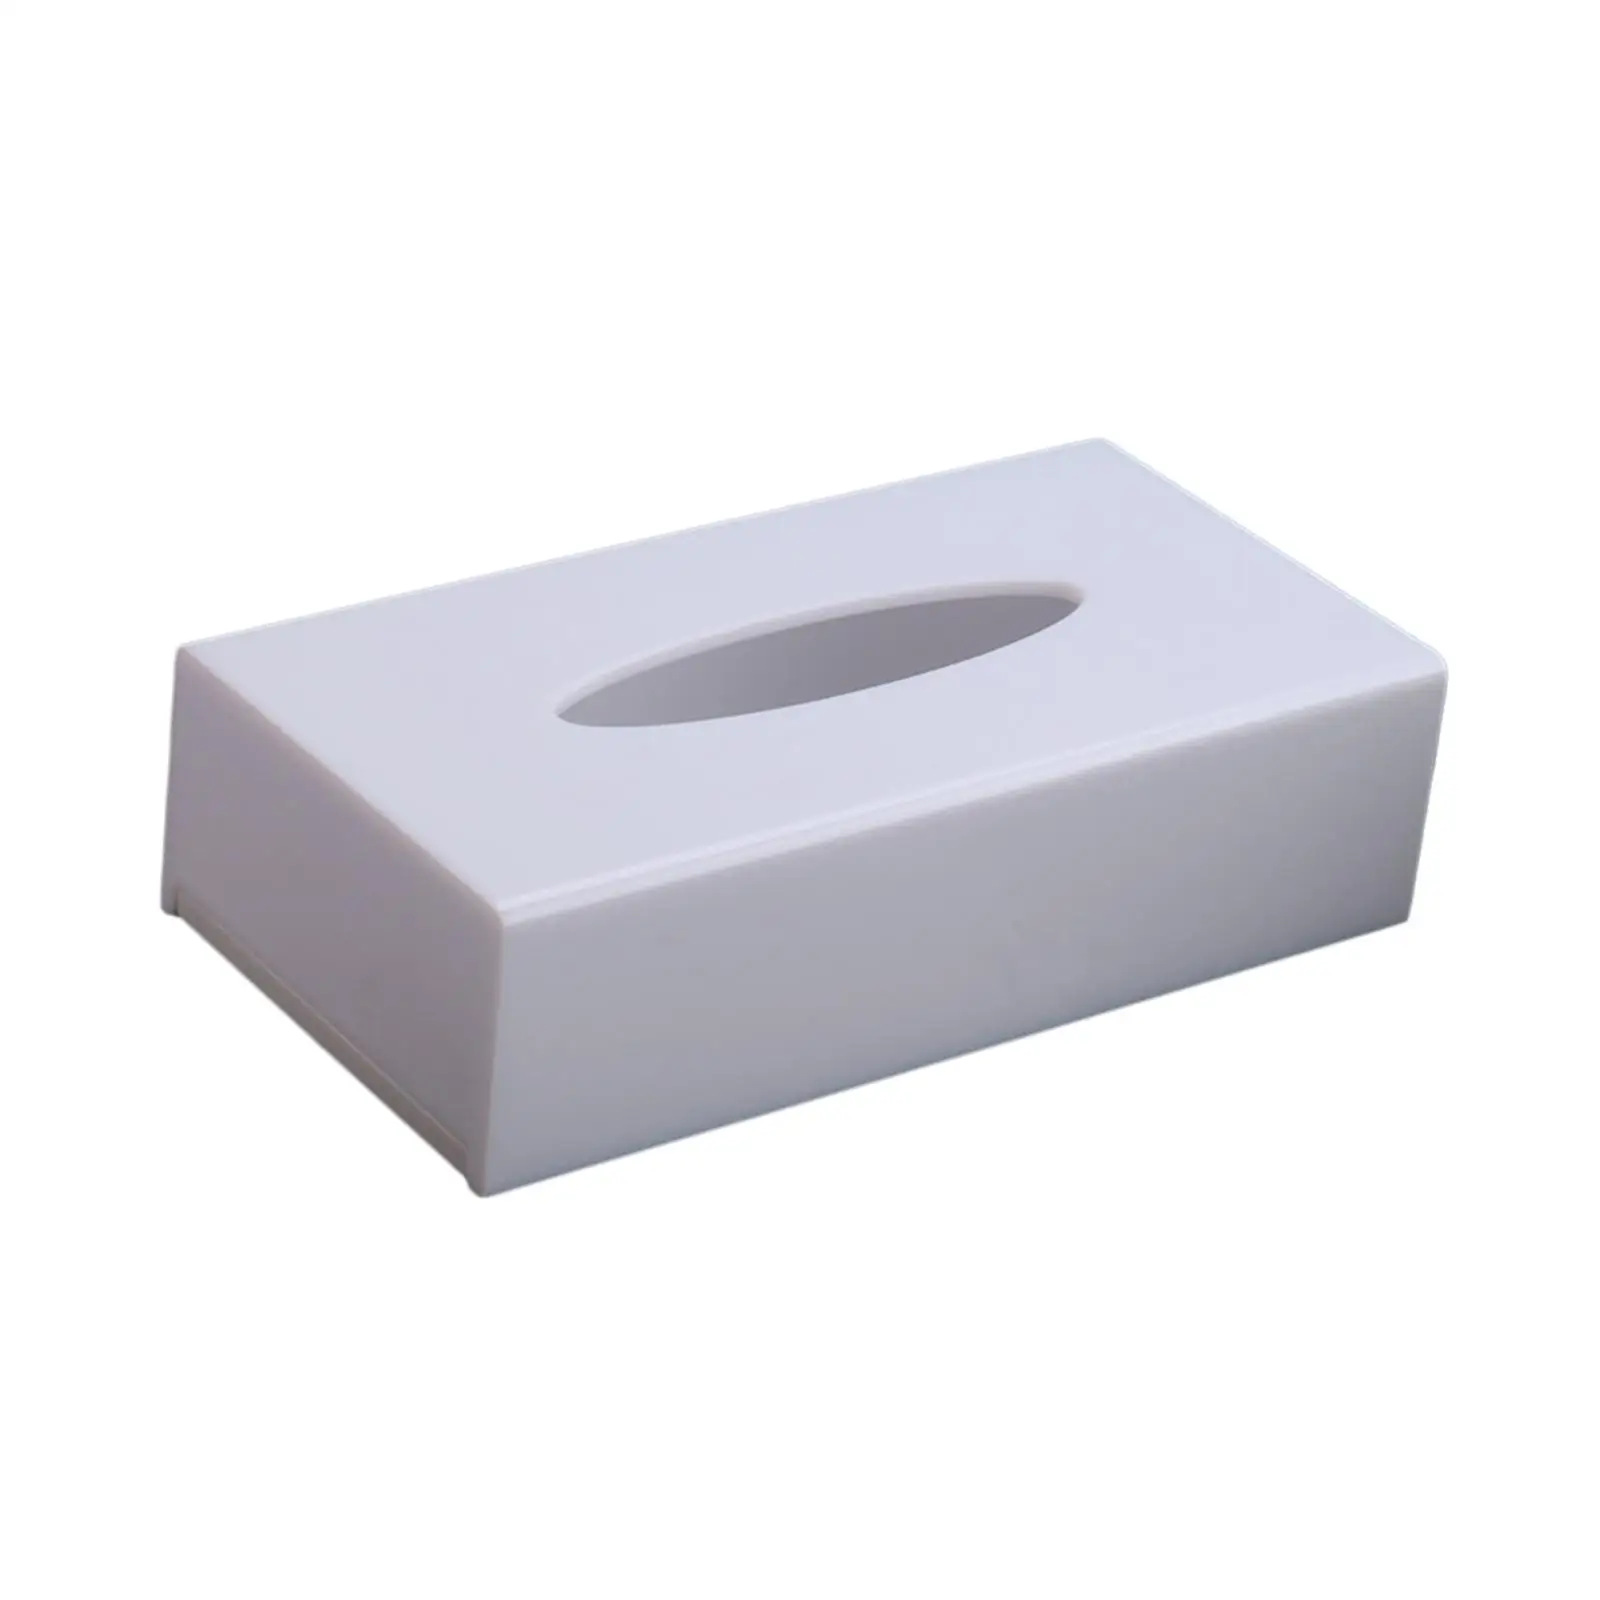 Facial Tissue Case Acrylic Toilet Paper Rack Tissue Paper Holder Container Tissue Box for Office Hotel Desktop Washroom Bedroom